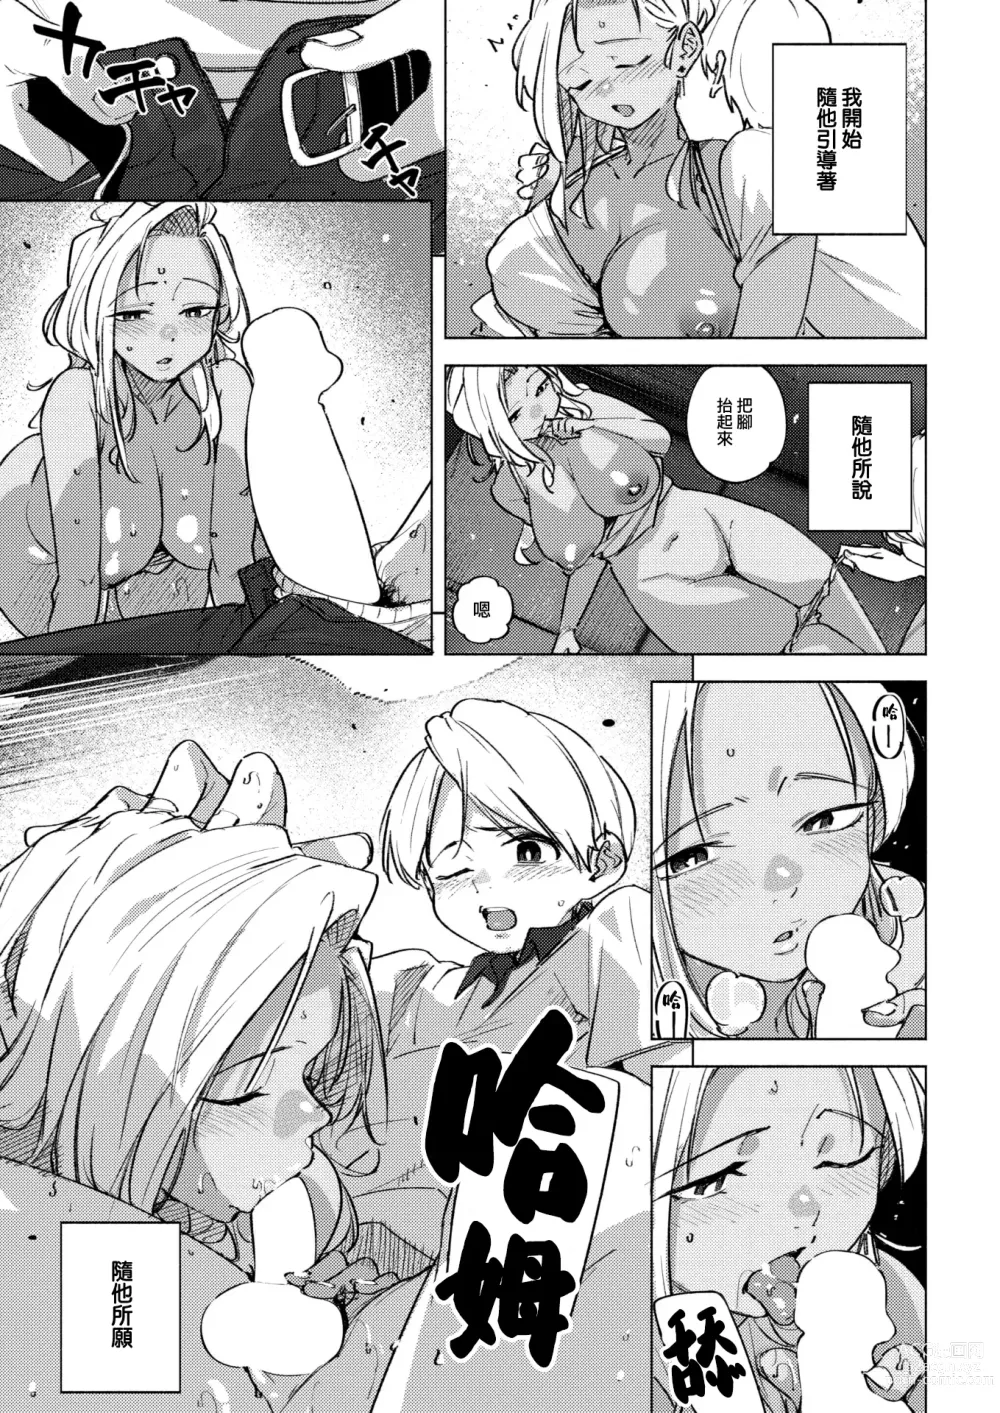 Page 16 of manga Ii Wake - reasons for orgasm